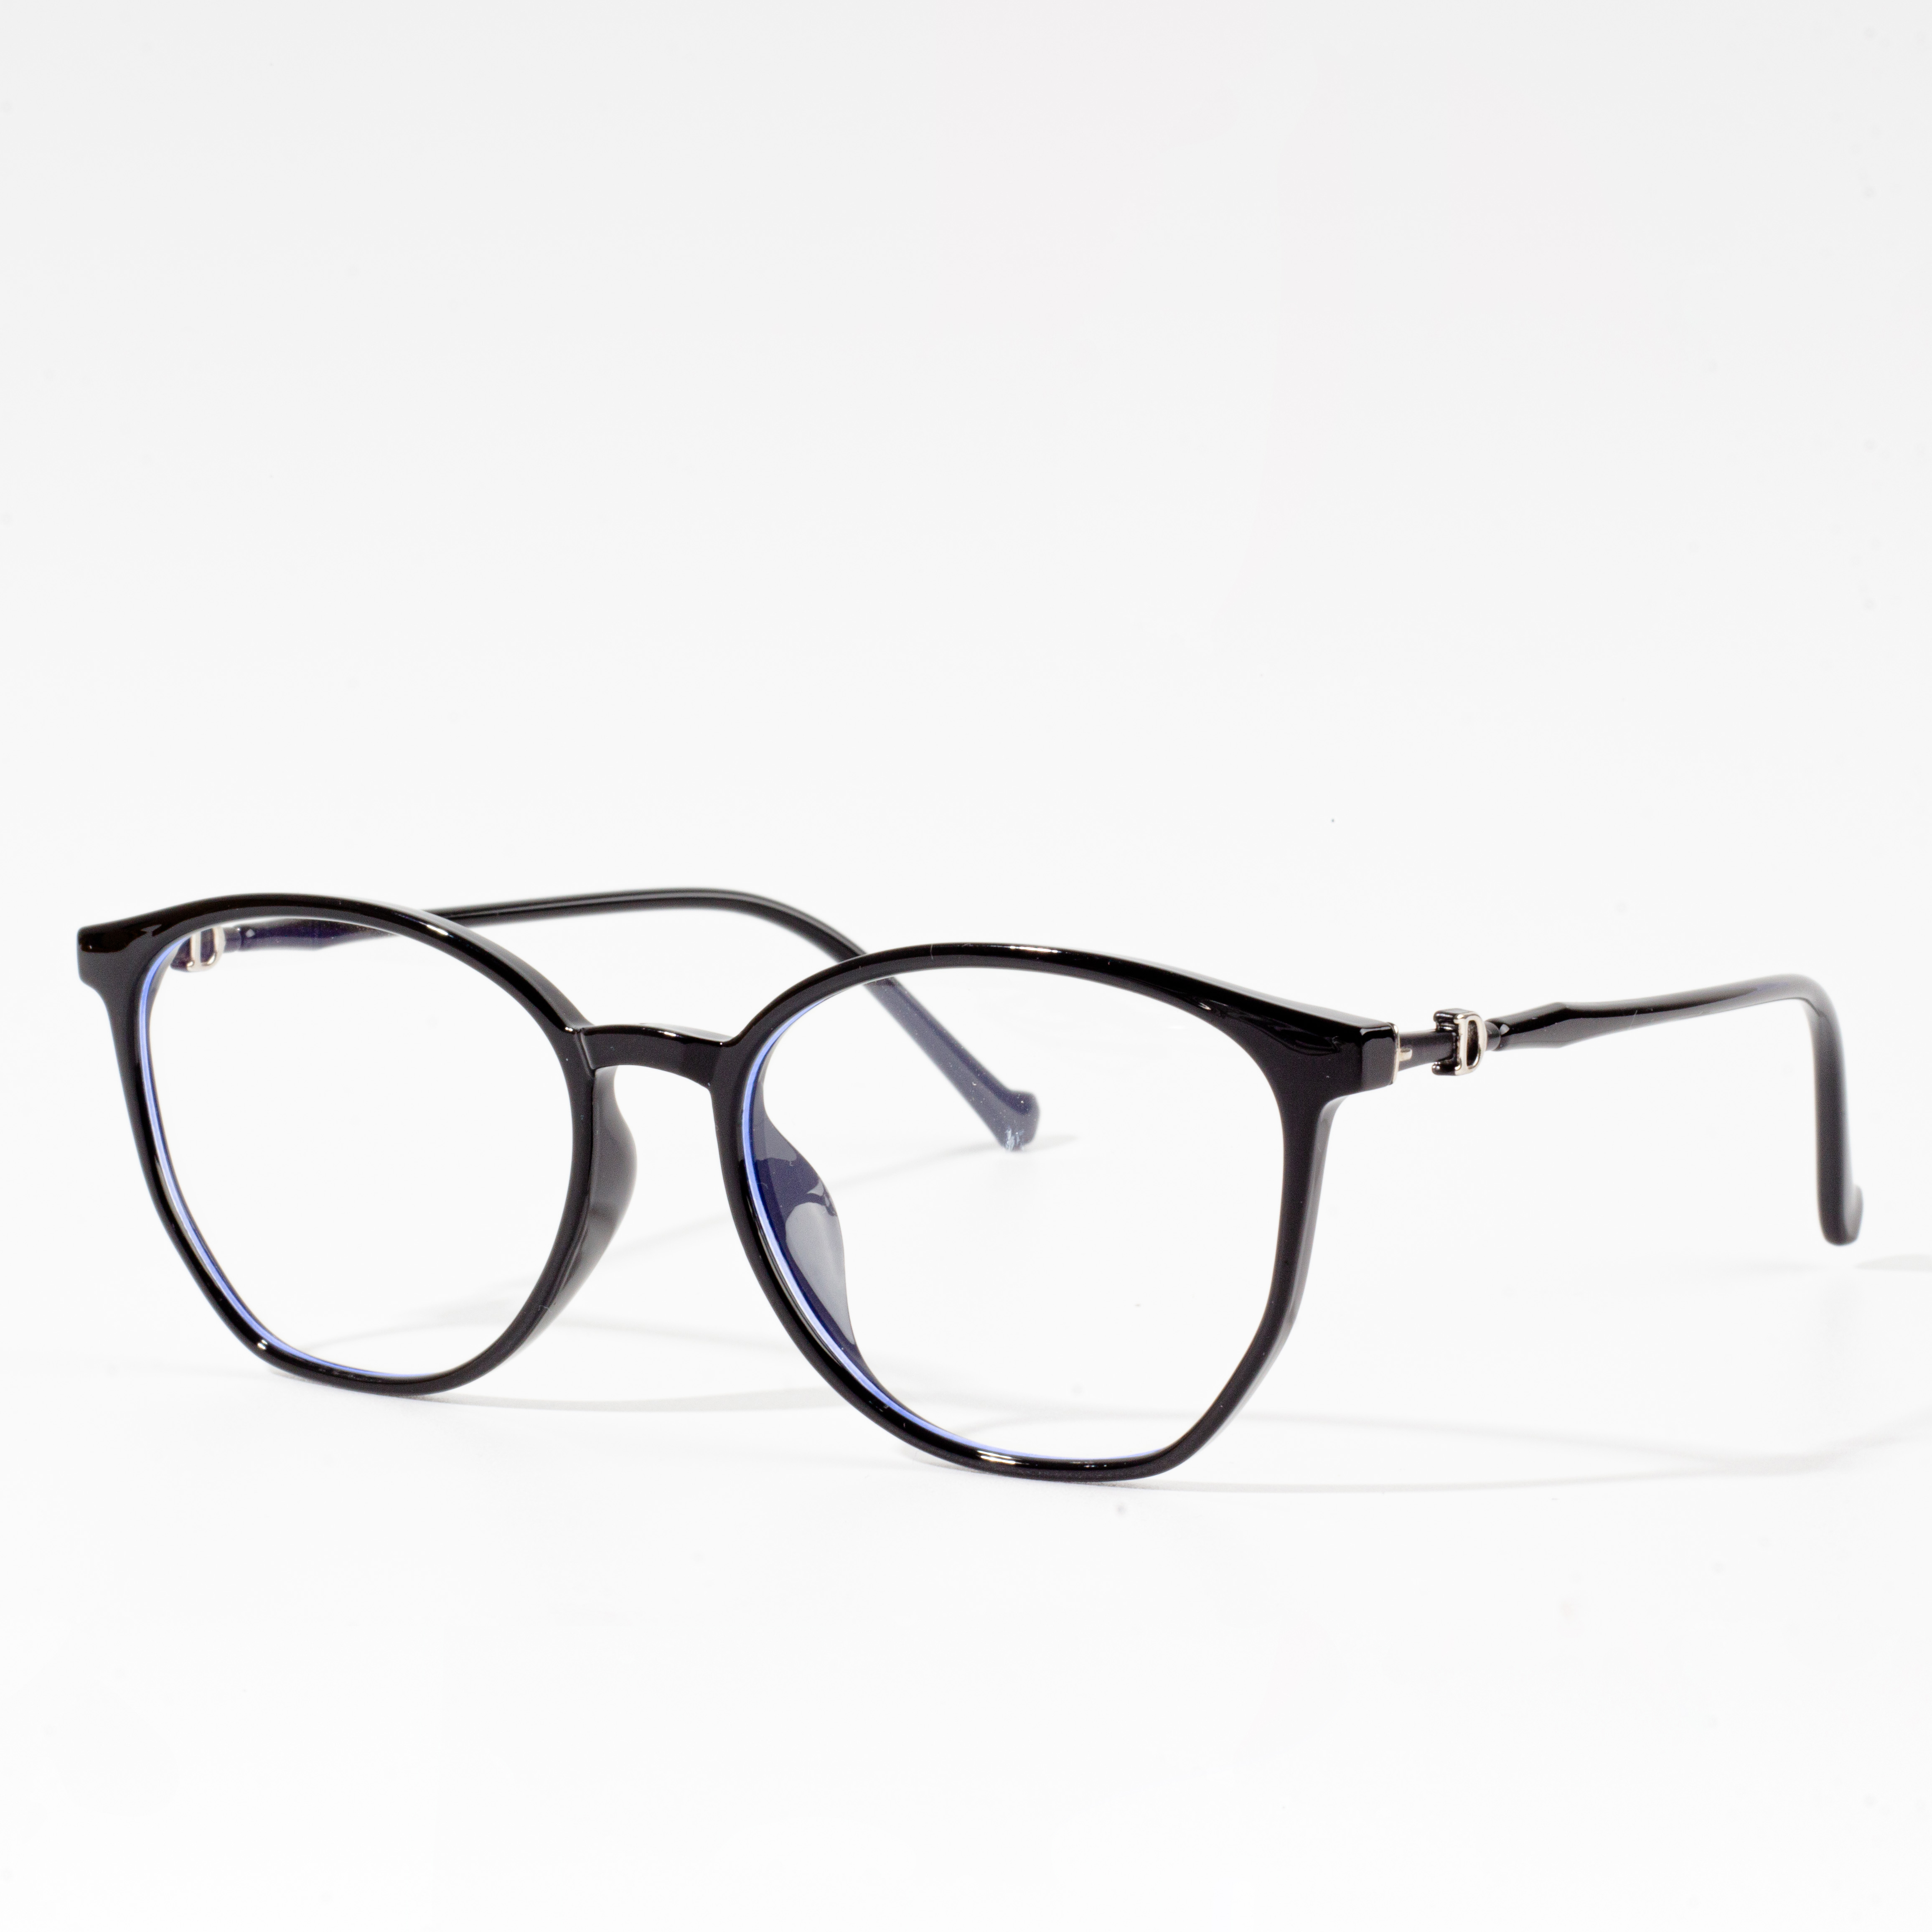 eyeglass frames for sale